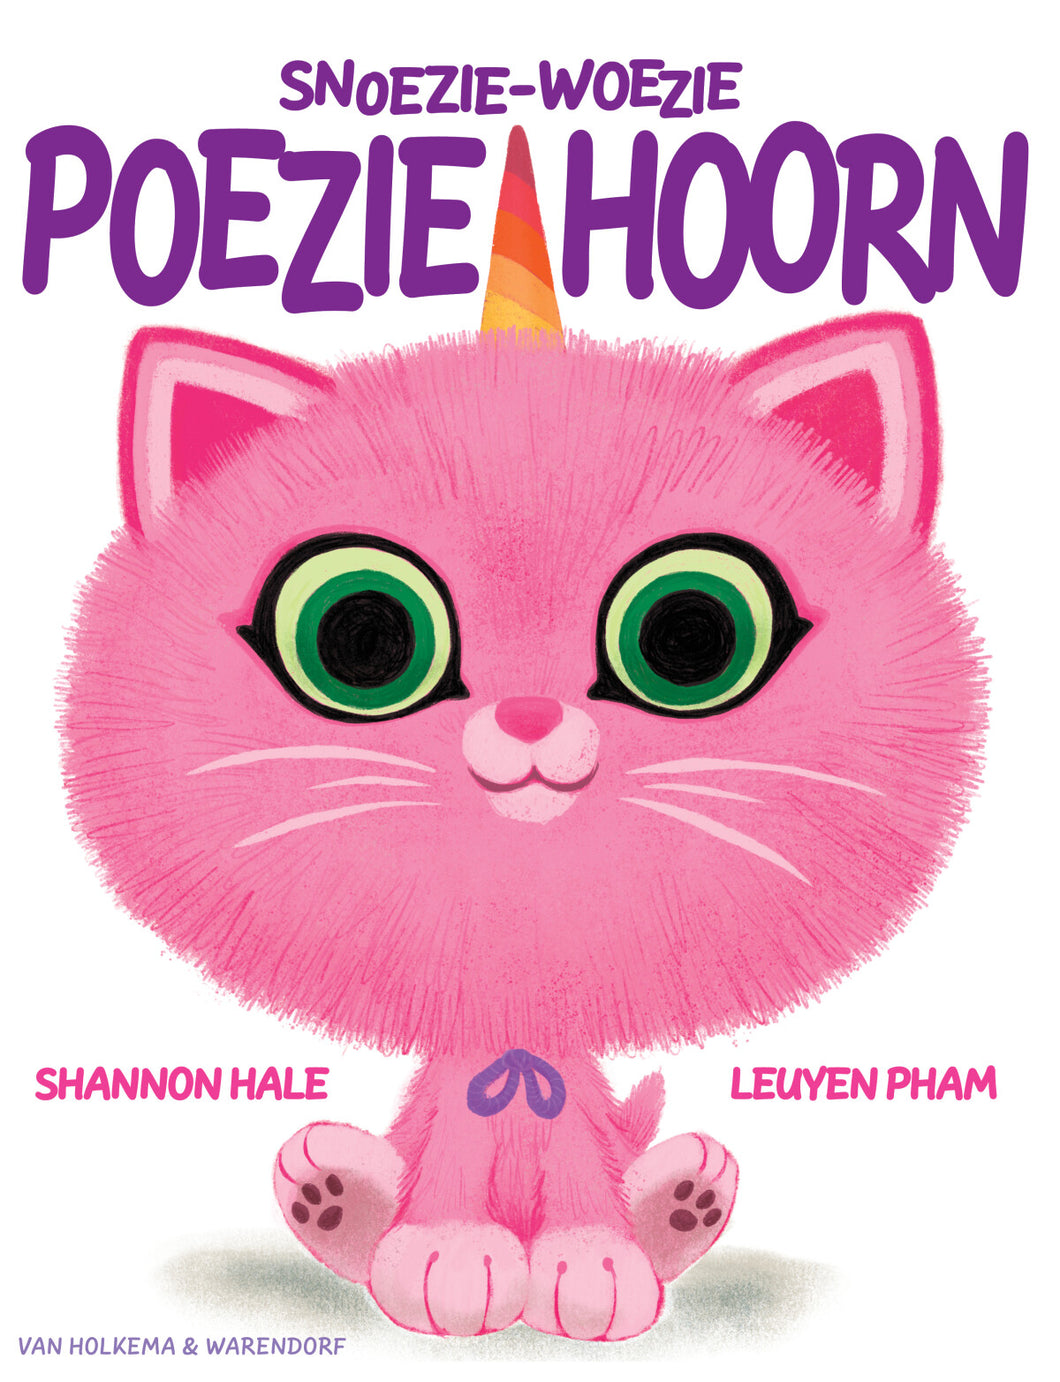 Snoezie-woezie poeziehoorn - Shannon Hale & Leuyen Pham